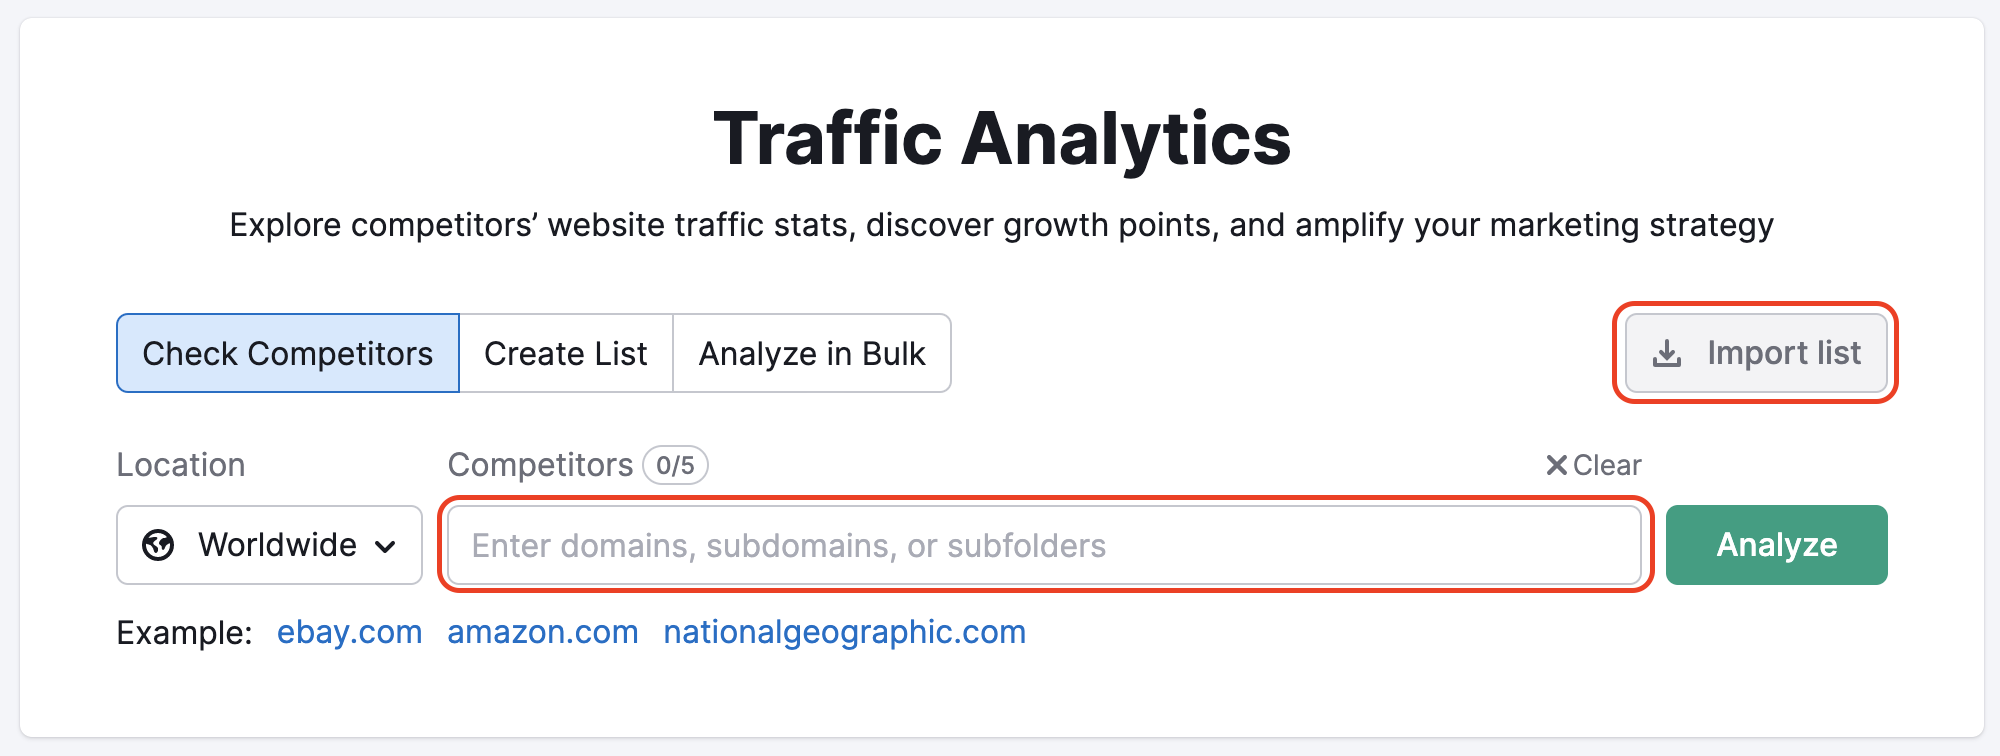 A screenshot of the "Traffic Analytics" landing page